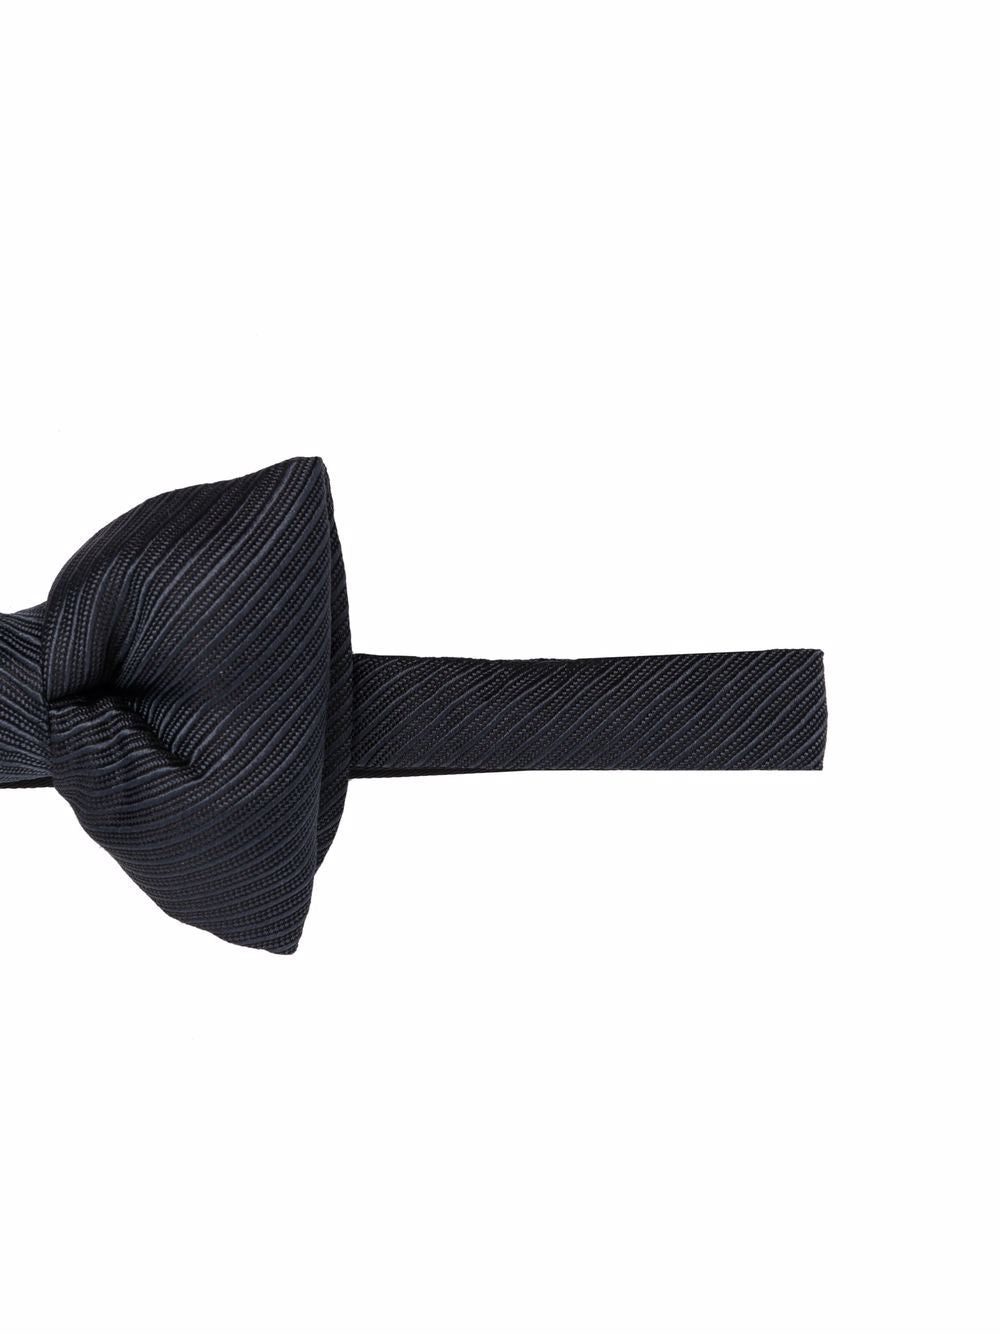 Grey silk pinstripe bow tie